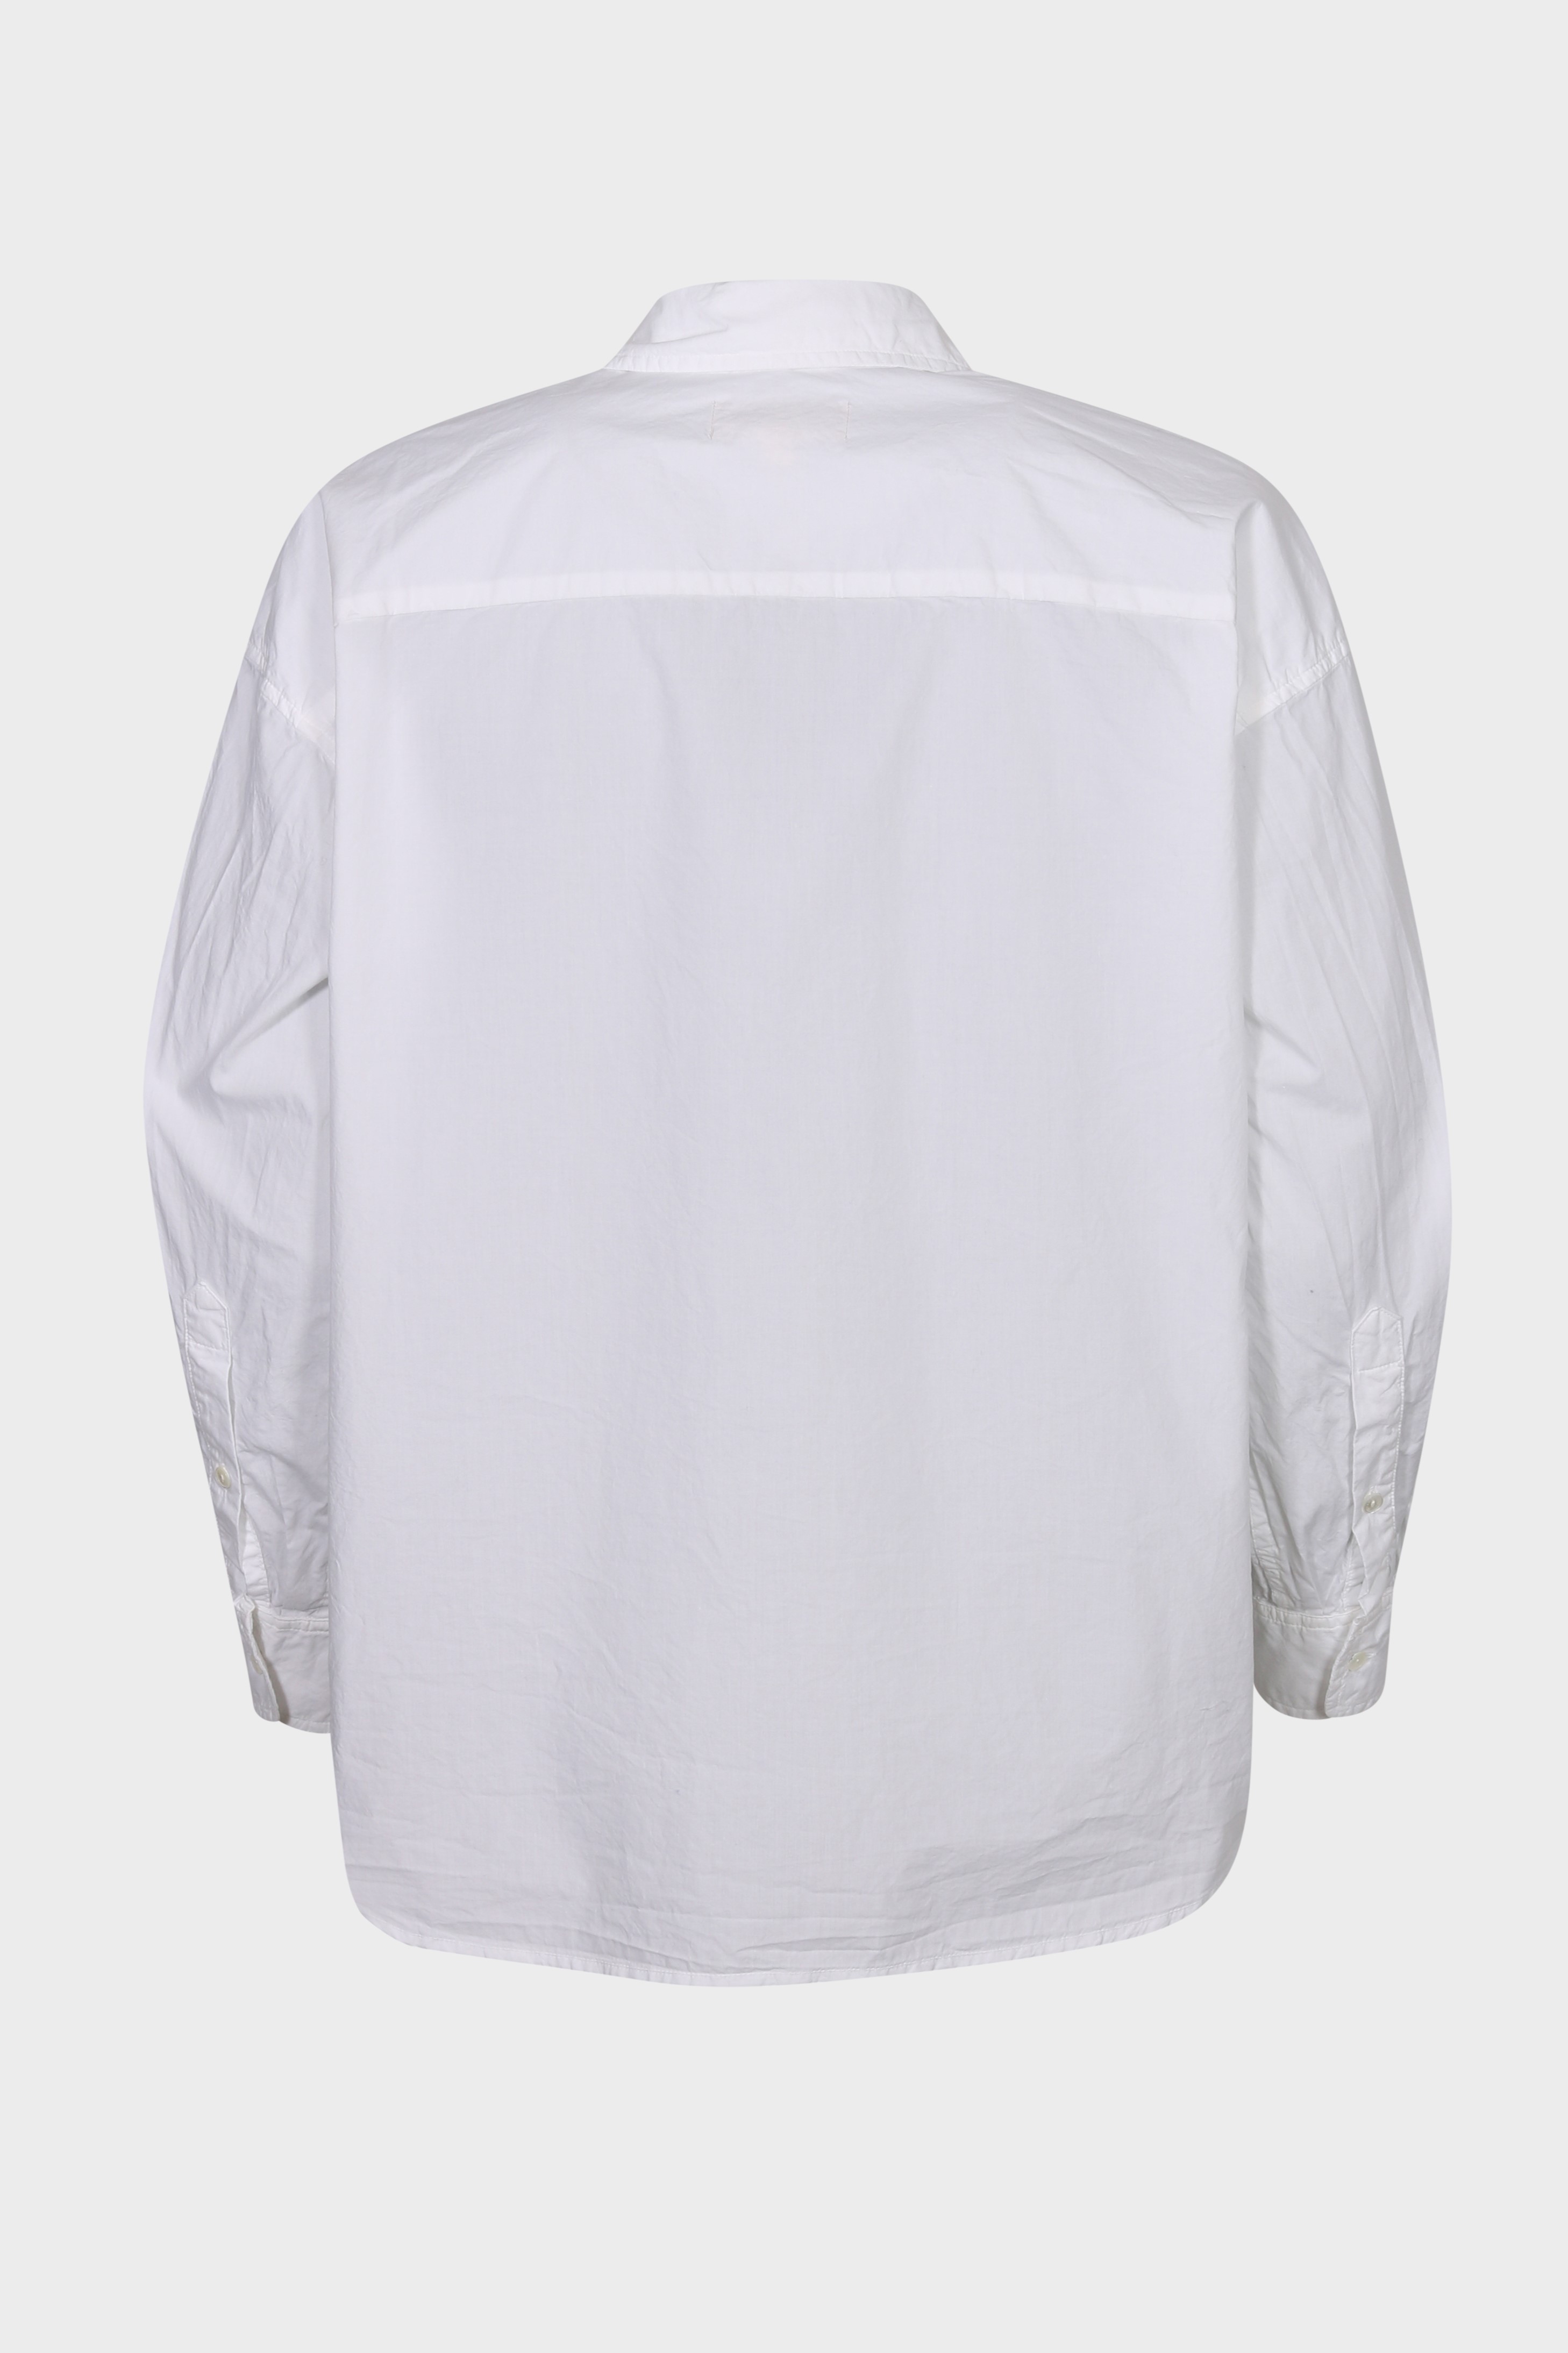 NILI LOTAN Mael Oversized Shirt in White XS